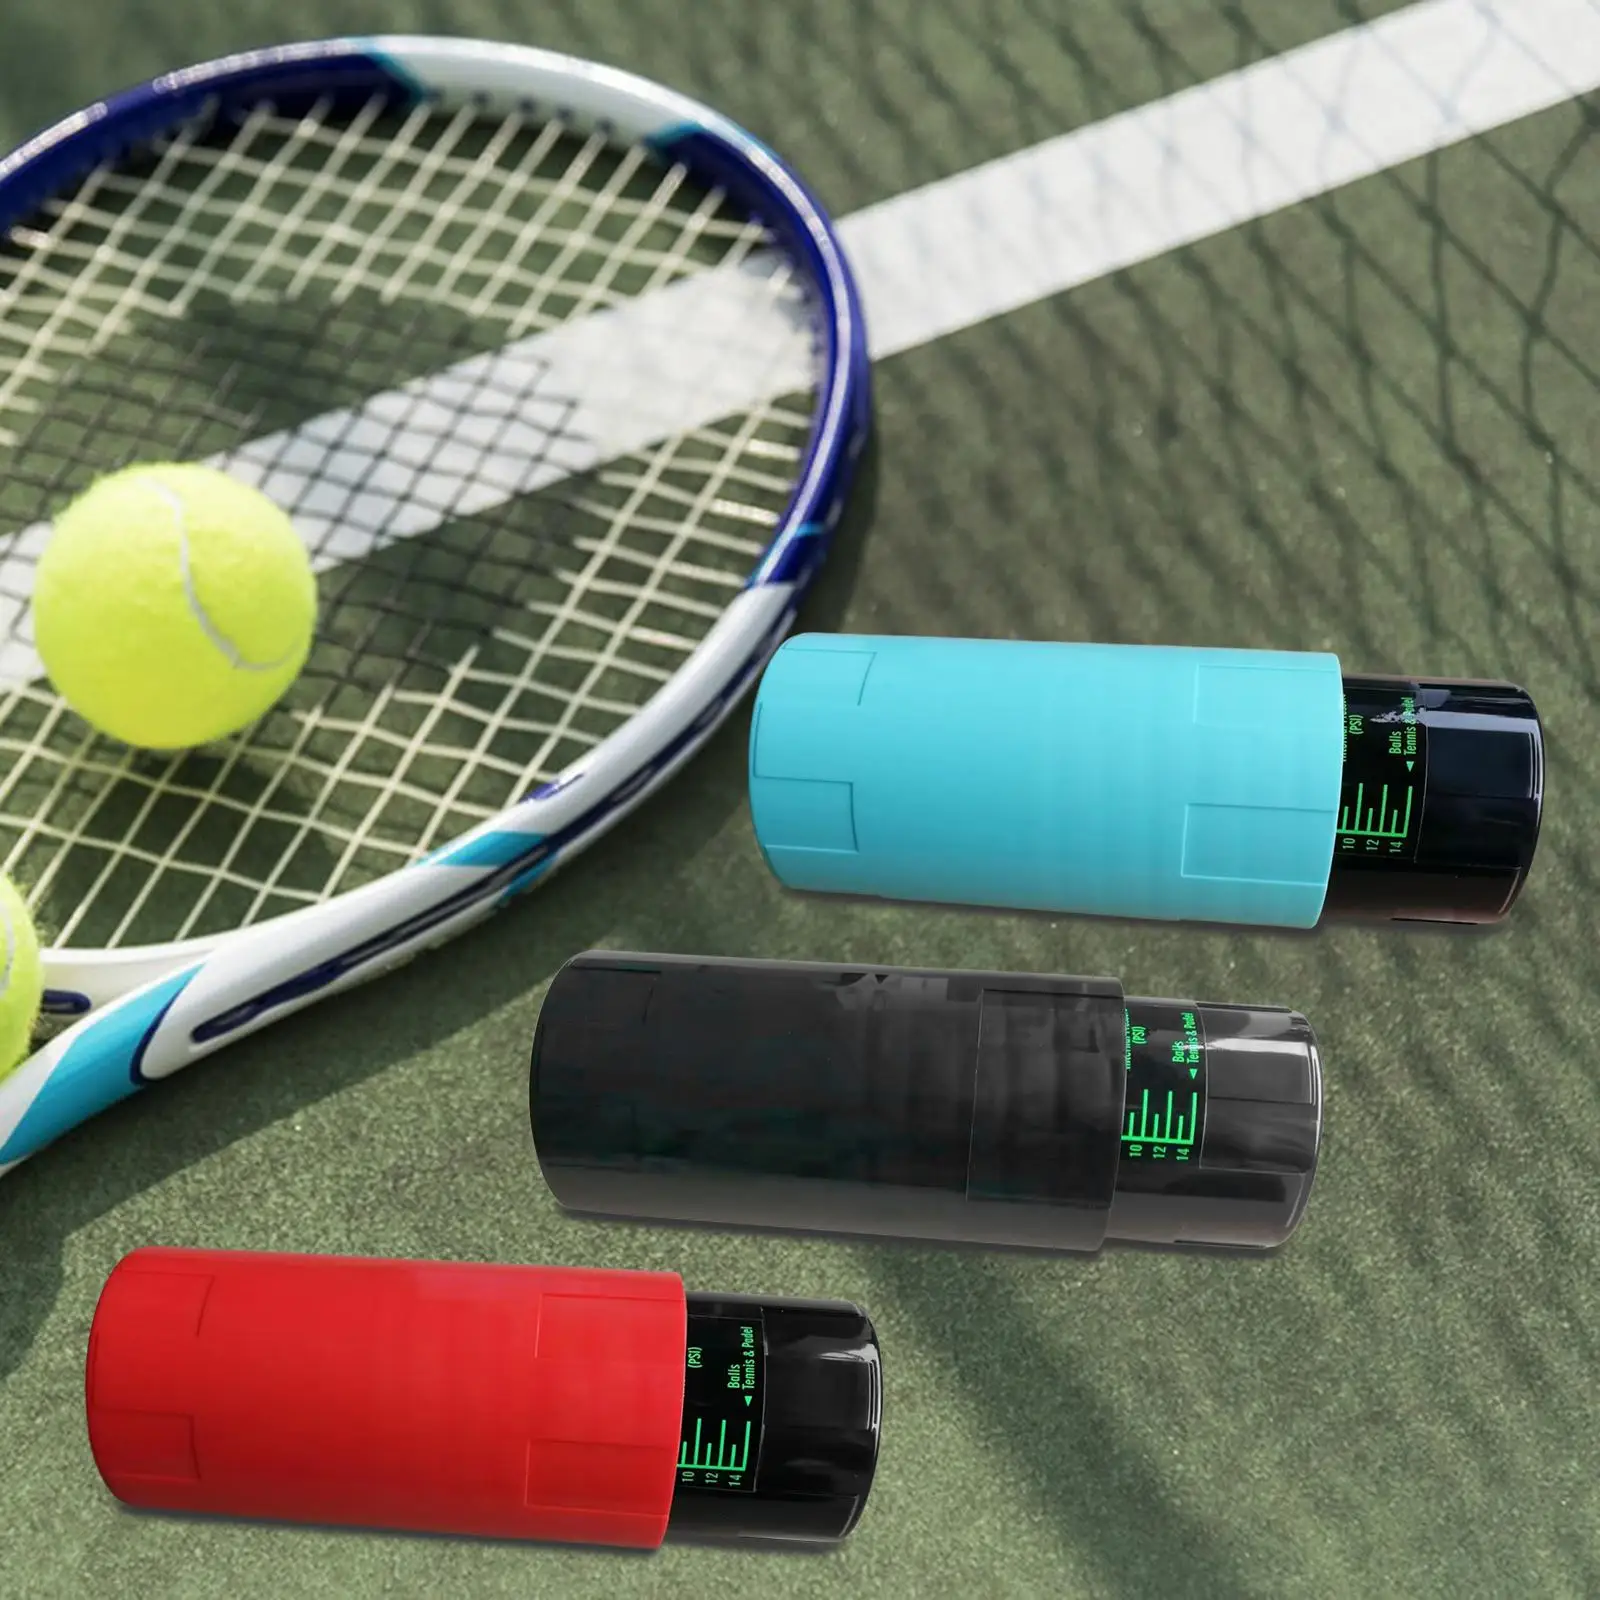 Tennis Ball Saver Equipment Tennis Shape Container Tennis Pressure Maintaining